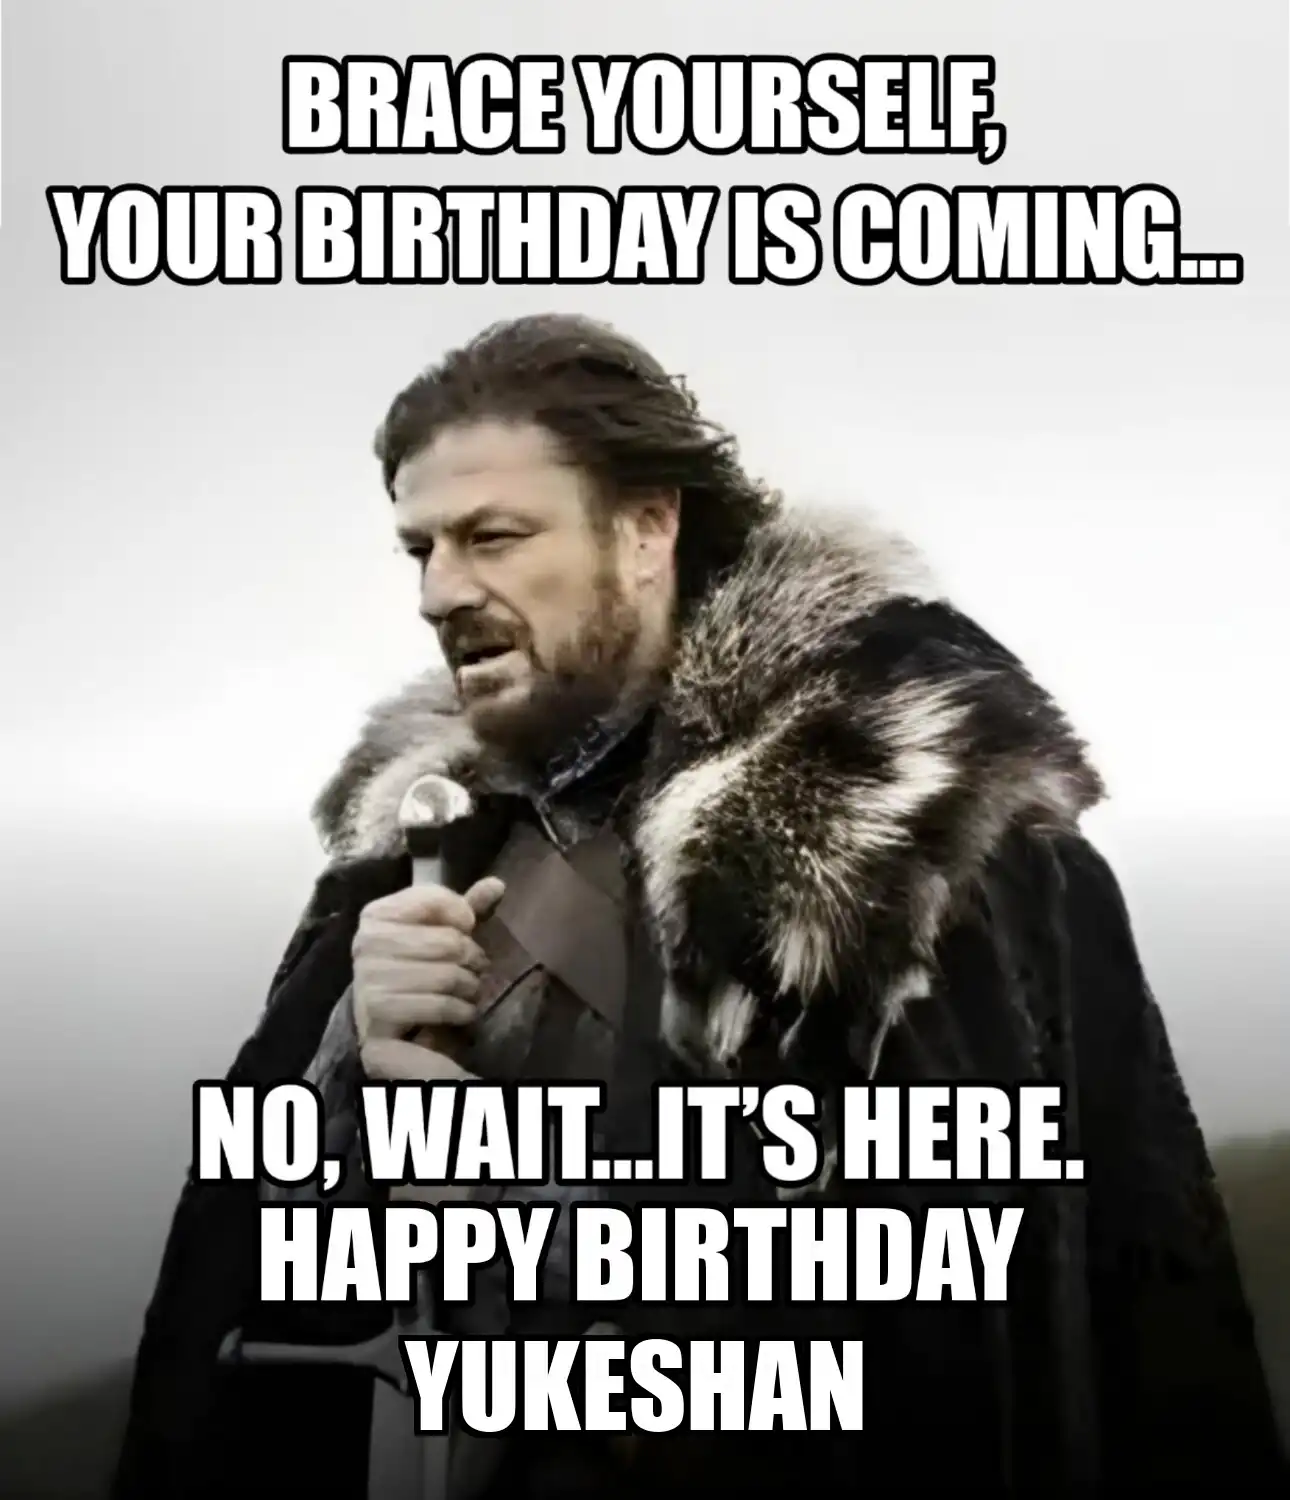 Happy Birthday Yukeshan Brace Yourself Your Birthday Is Coming Meme